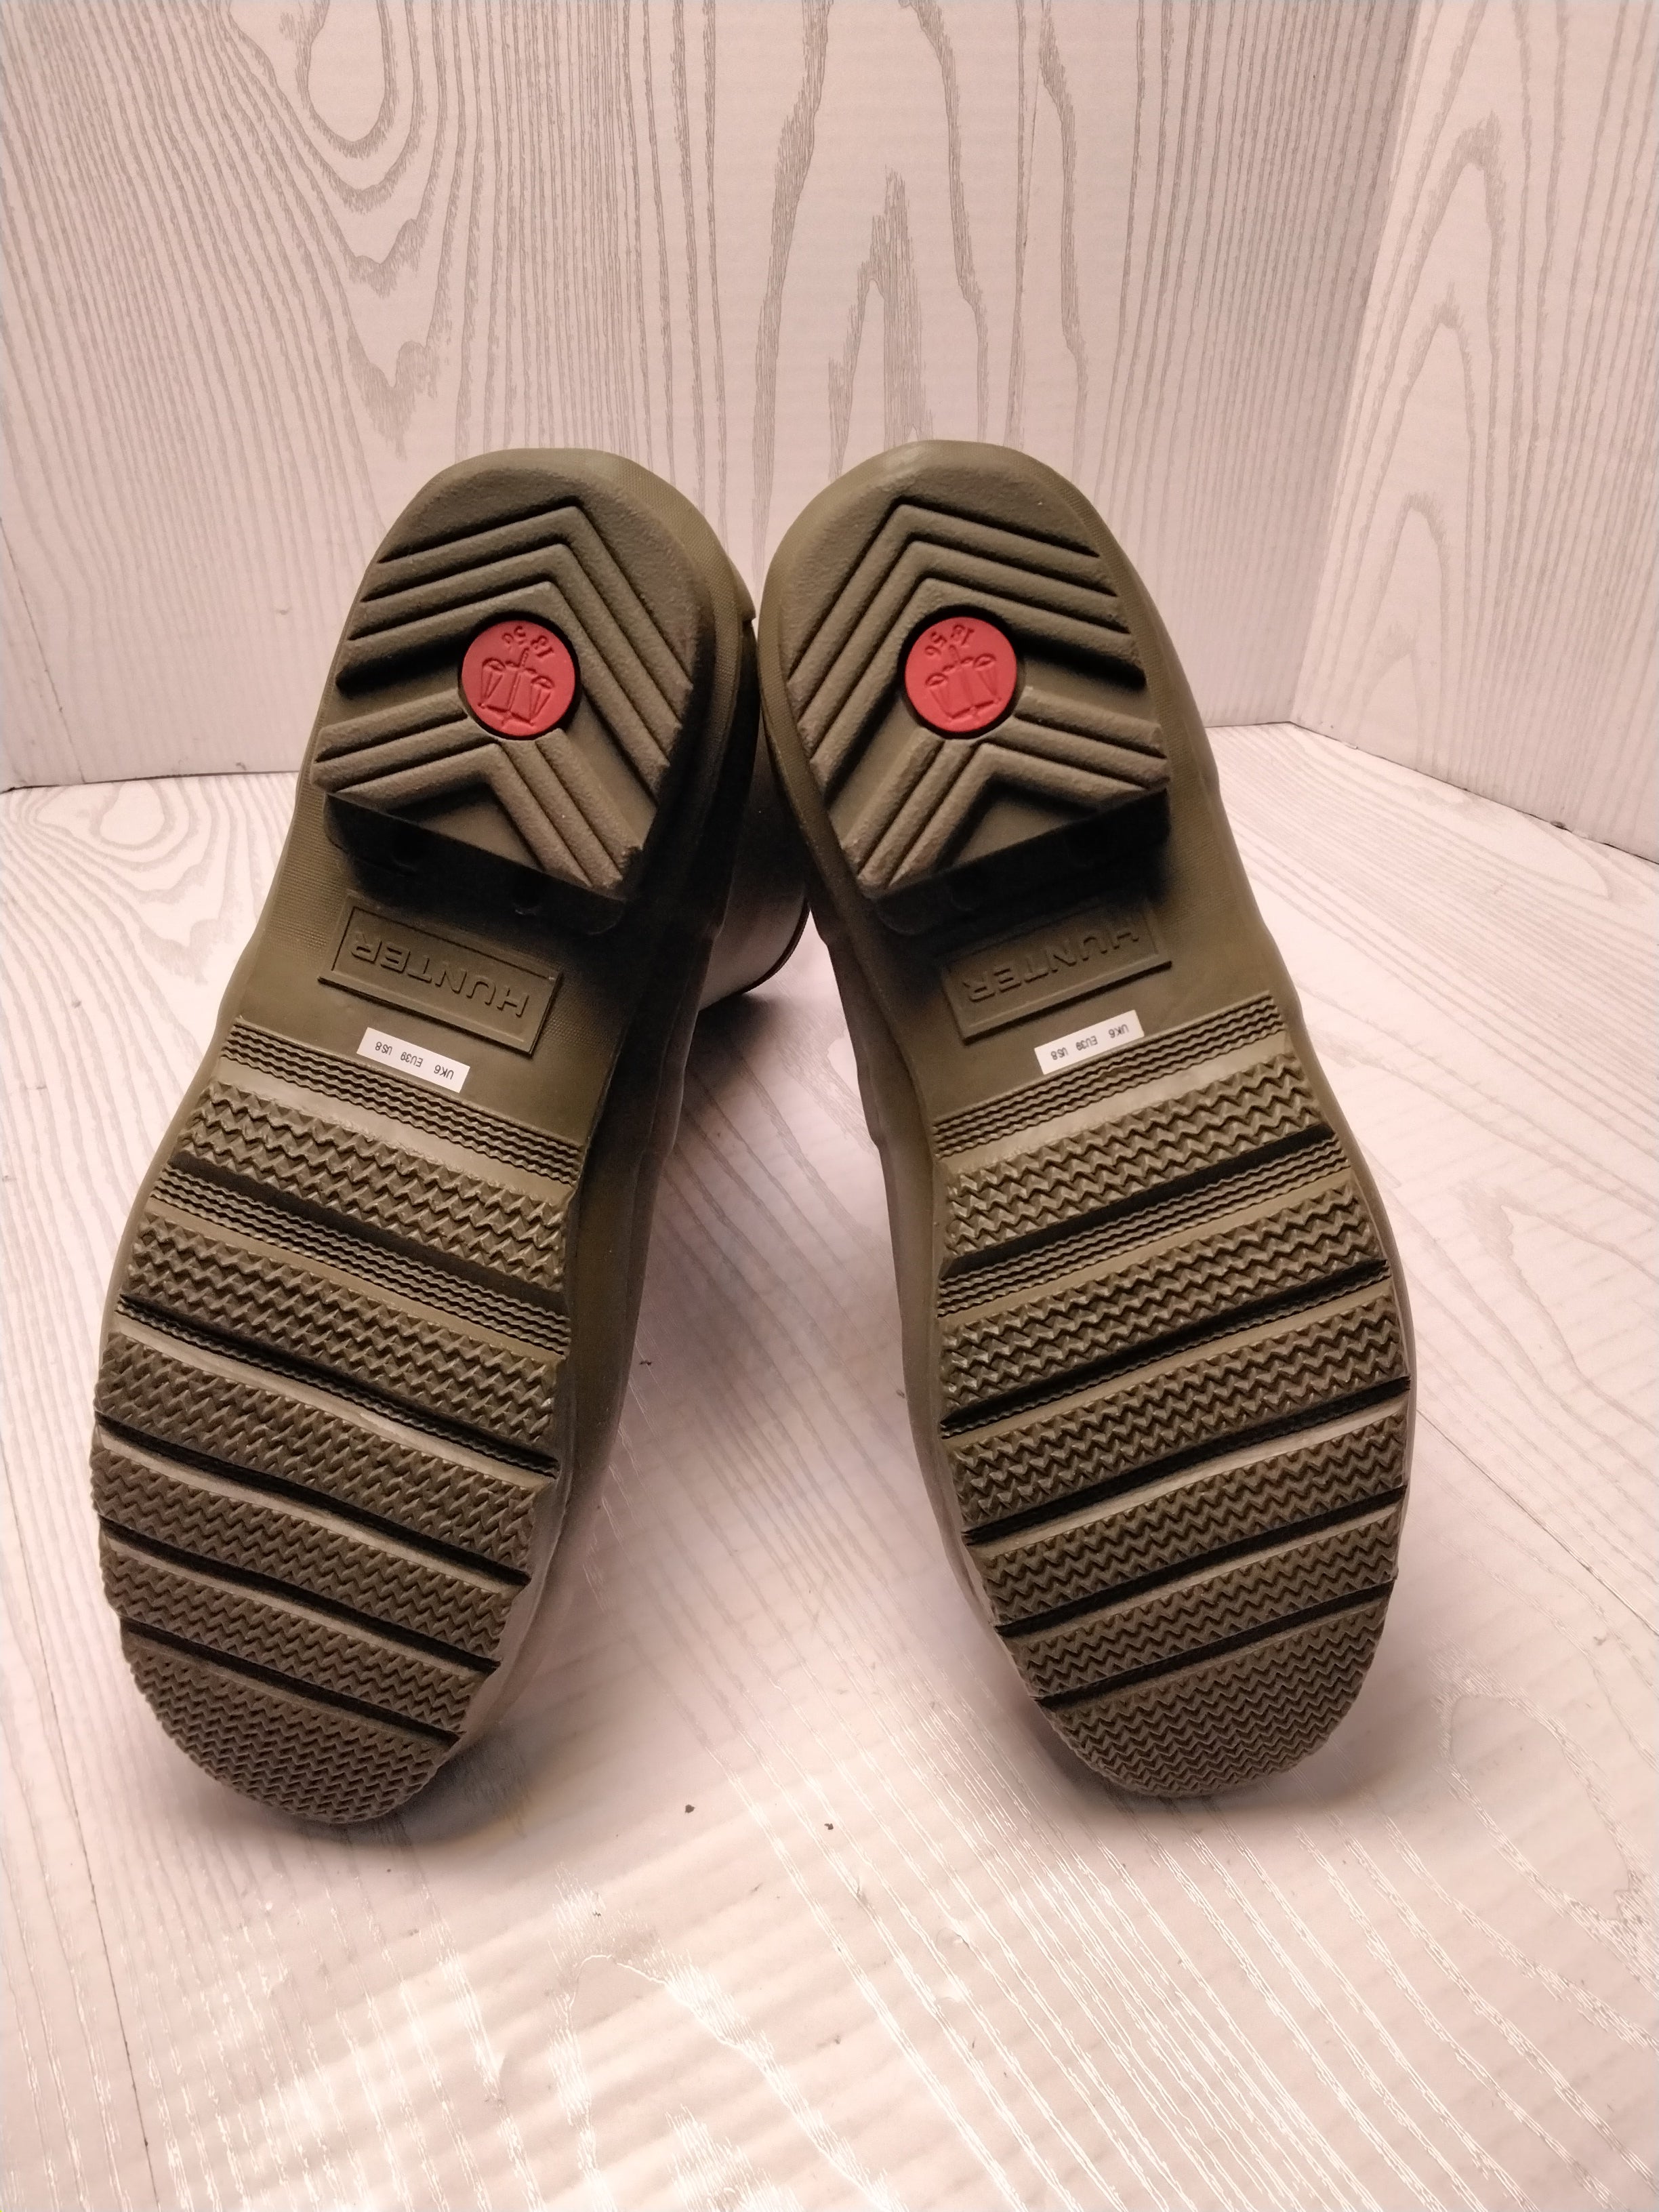 Hunter Women's Original Short Rain Boot, Size 8 - Olive Green (7870765957358)